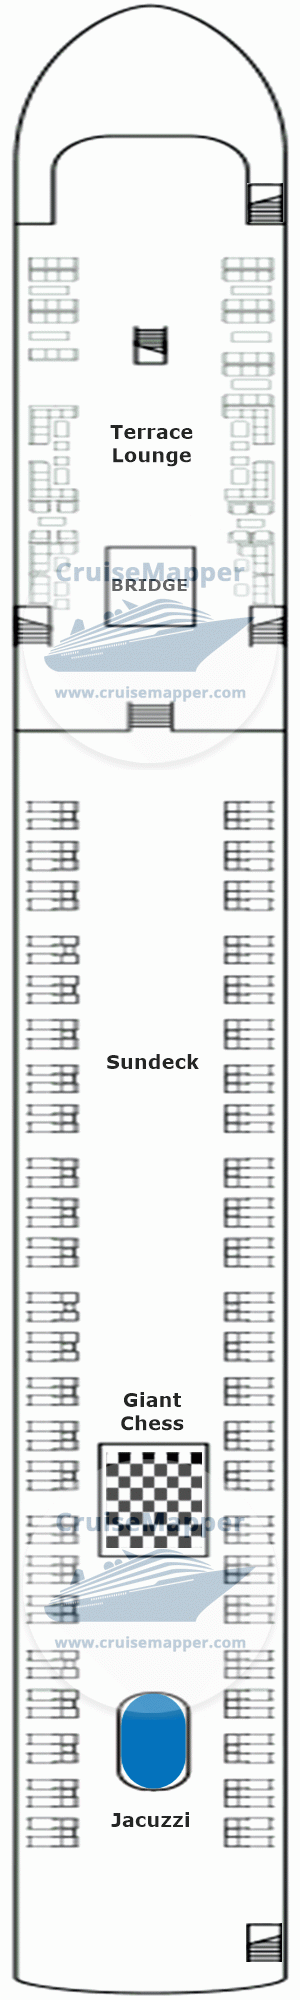 Spirit of the Rhine Deck 04 - Sundeck-Pool